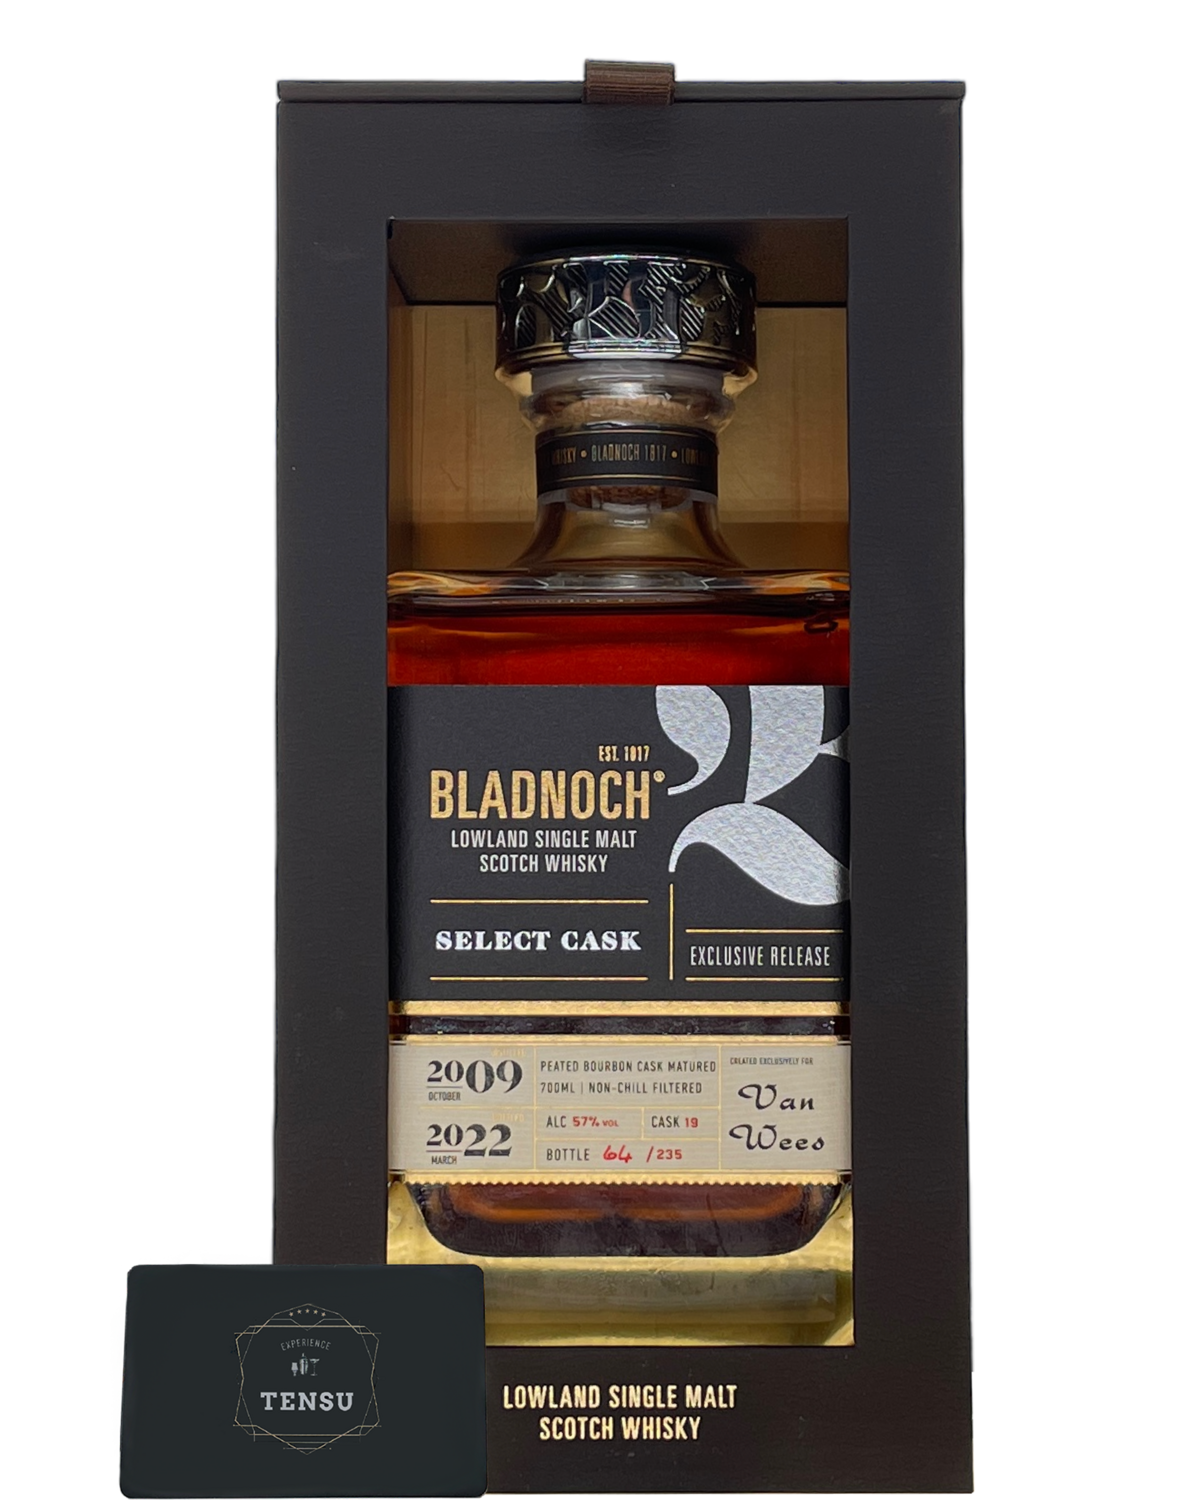 Bladnoch Select Cask (2009-2022) Peated Bourbon Cask 57.0 &quot;For Van Wees&quot;